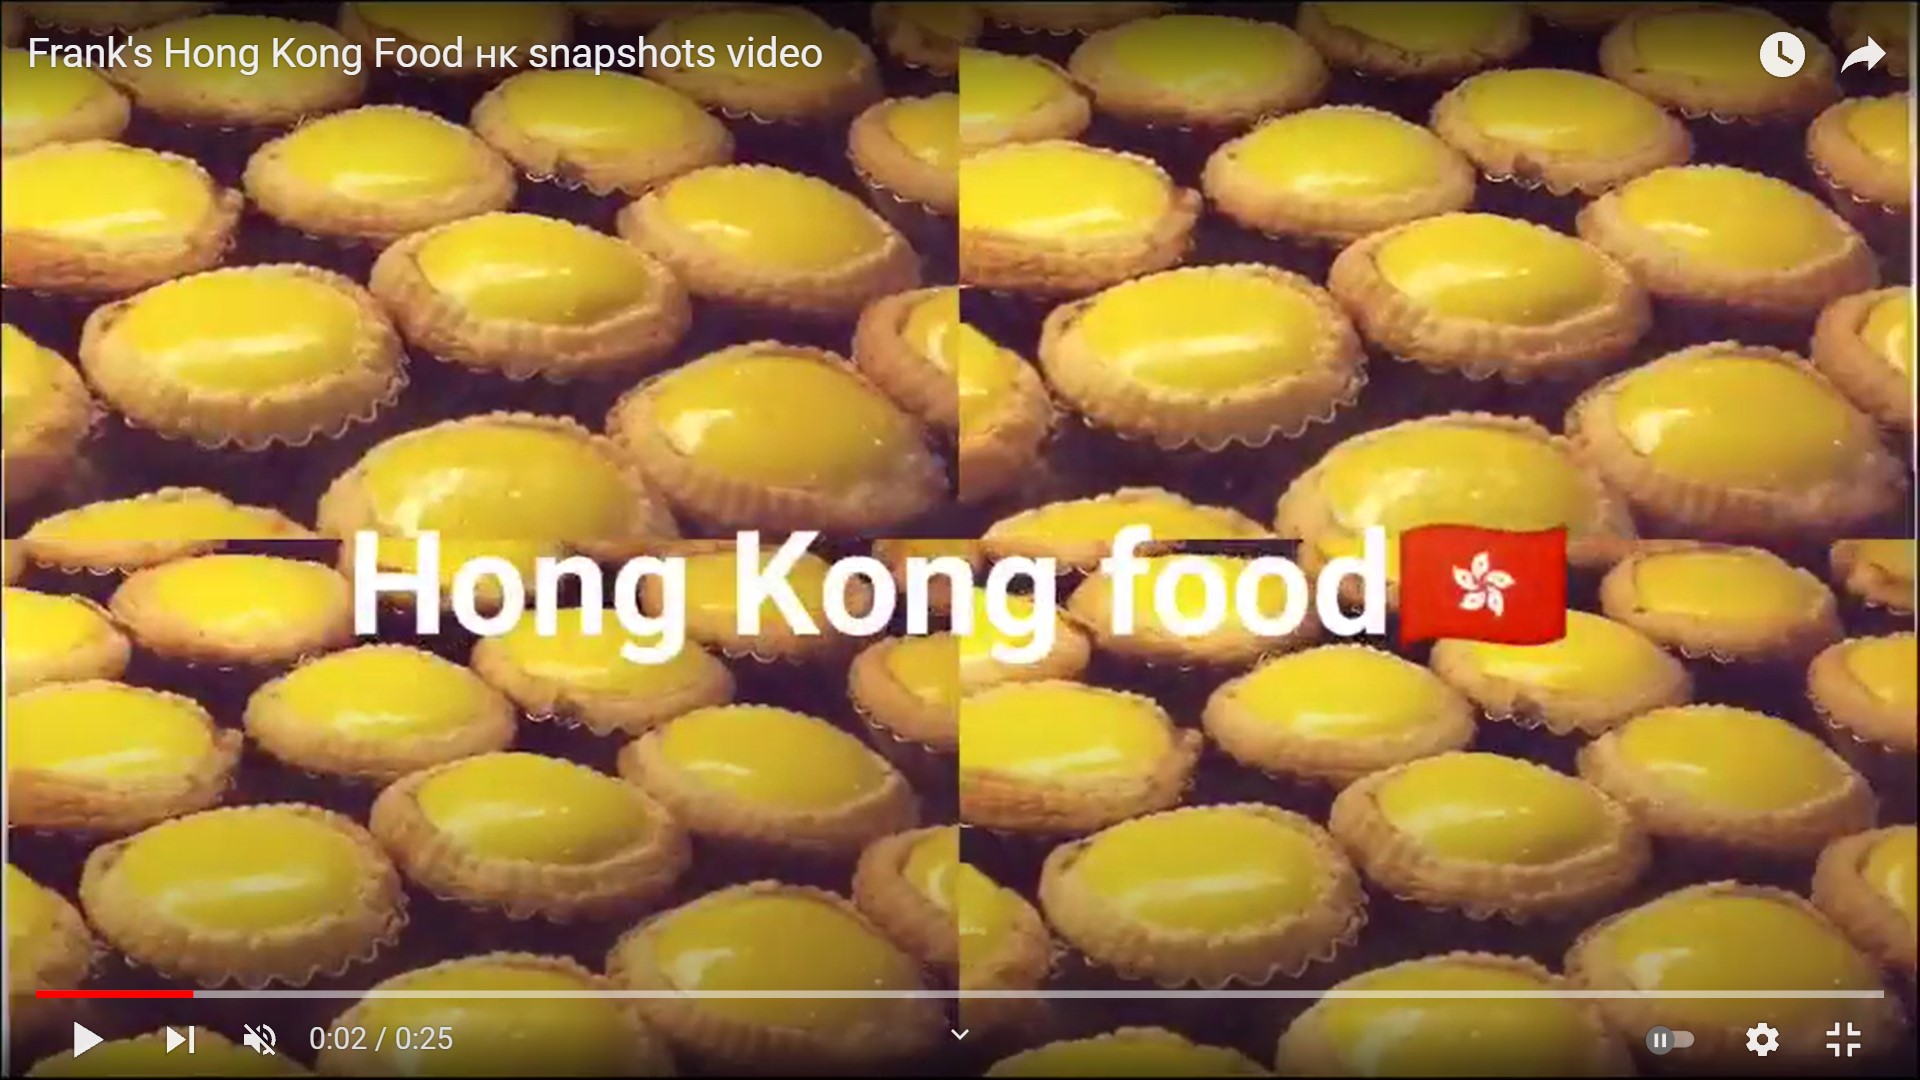 Hong Kong food snapshots video of Frank the tour guide